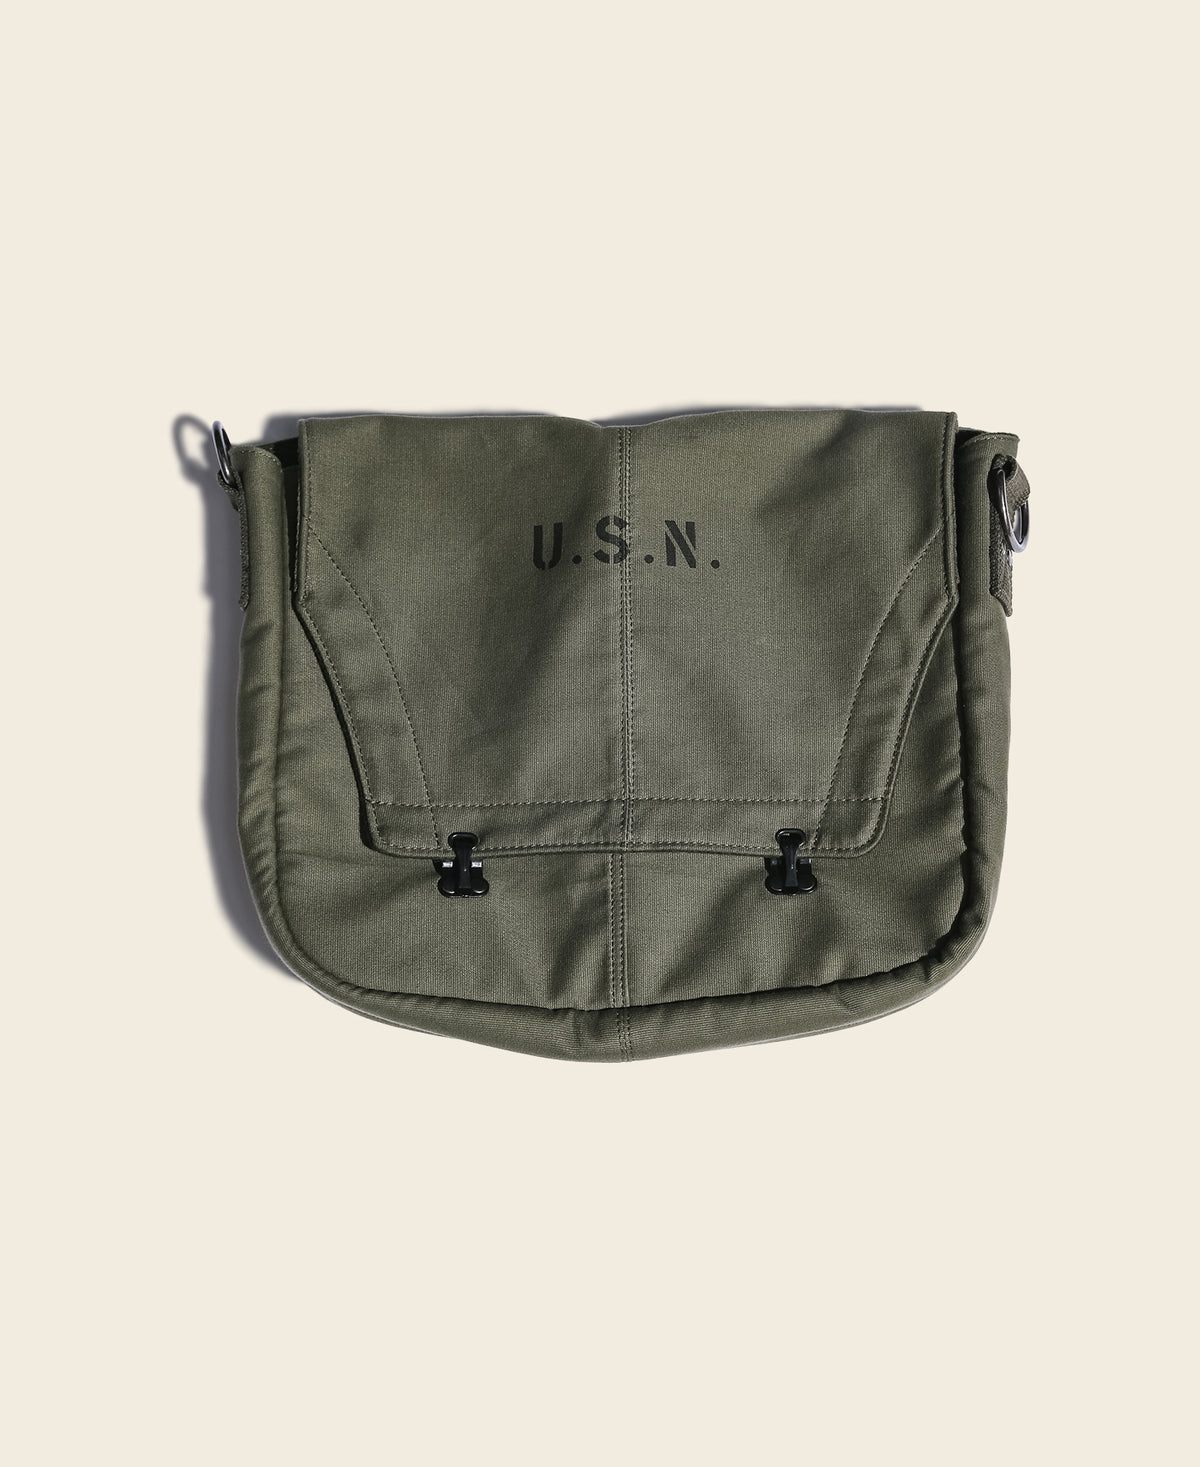 US Navy Modified Deck Tools Bag - Green